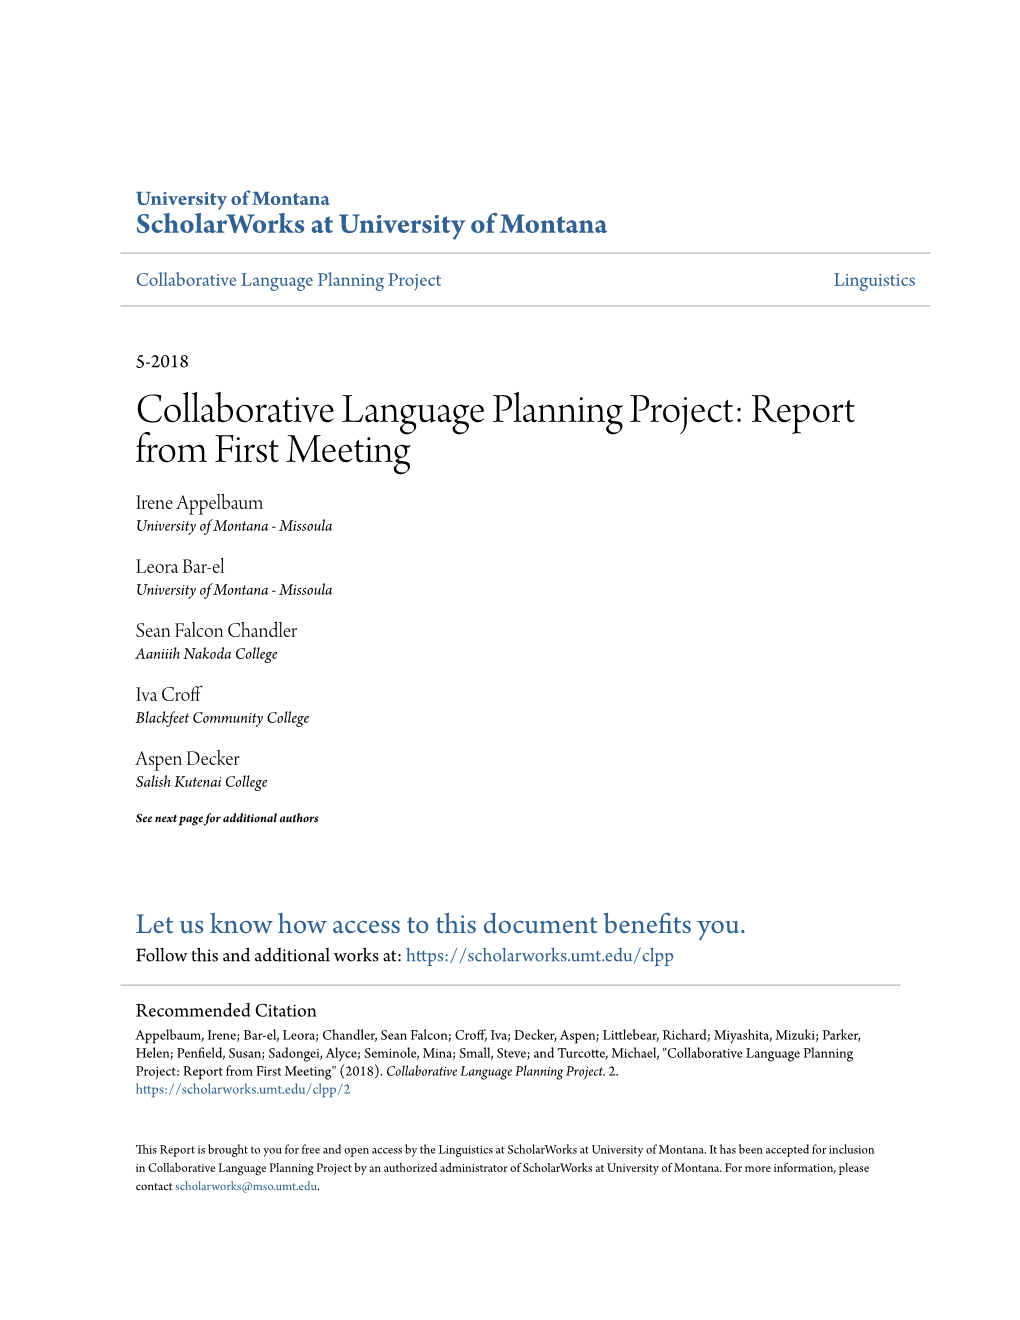 Collaborative Language Planning Project Linguistics